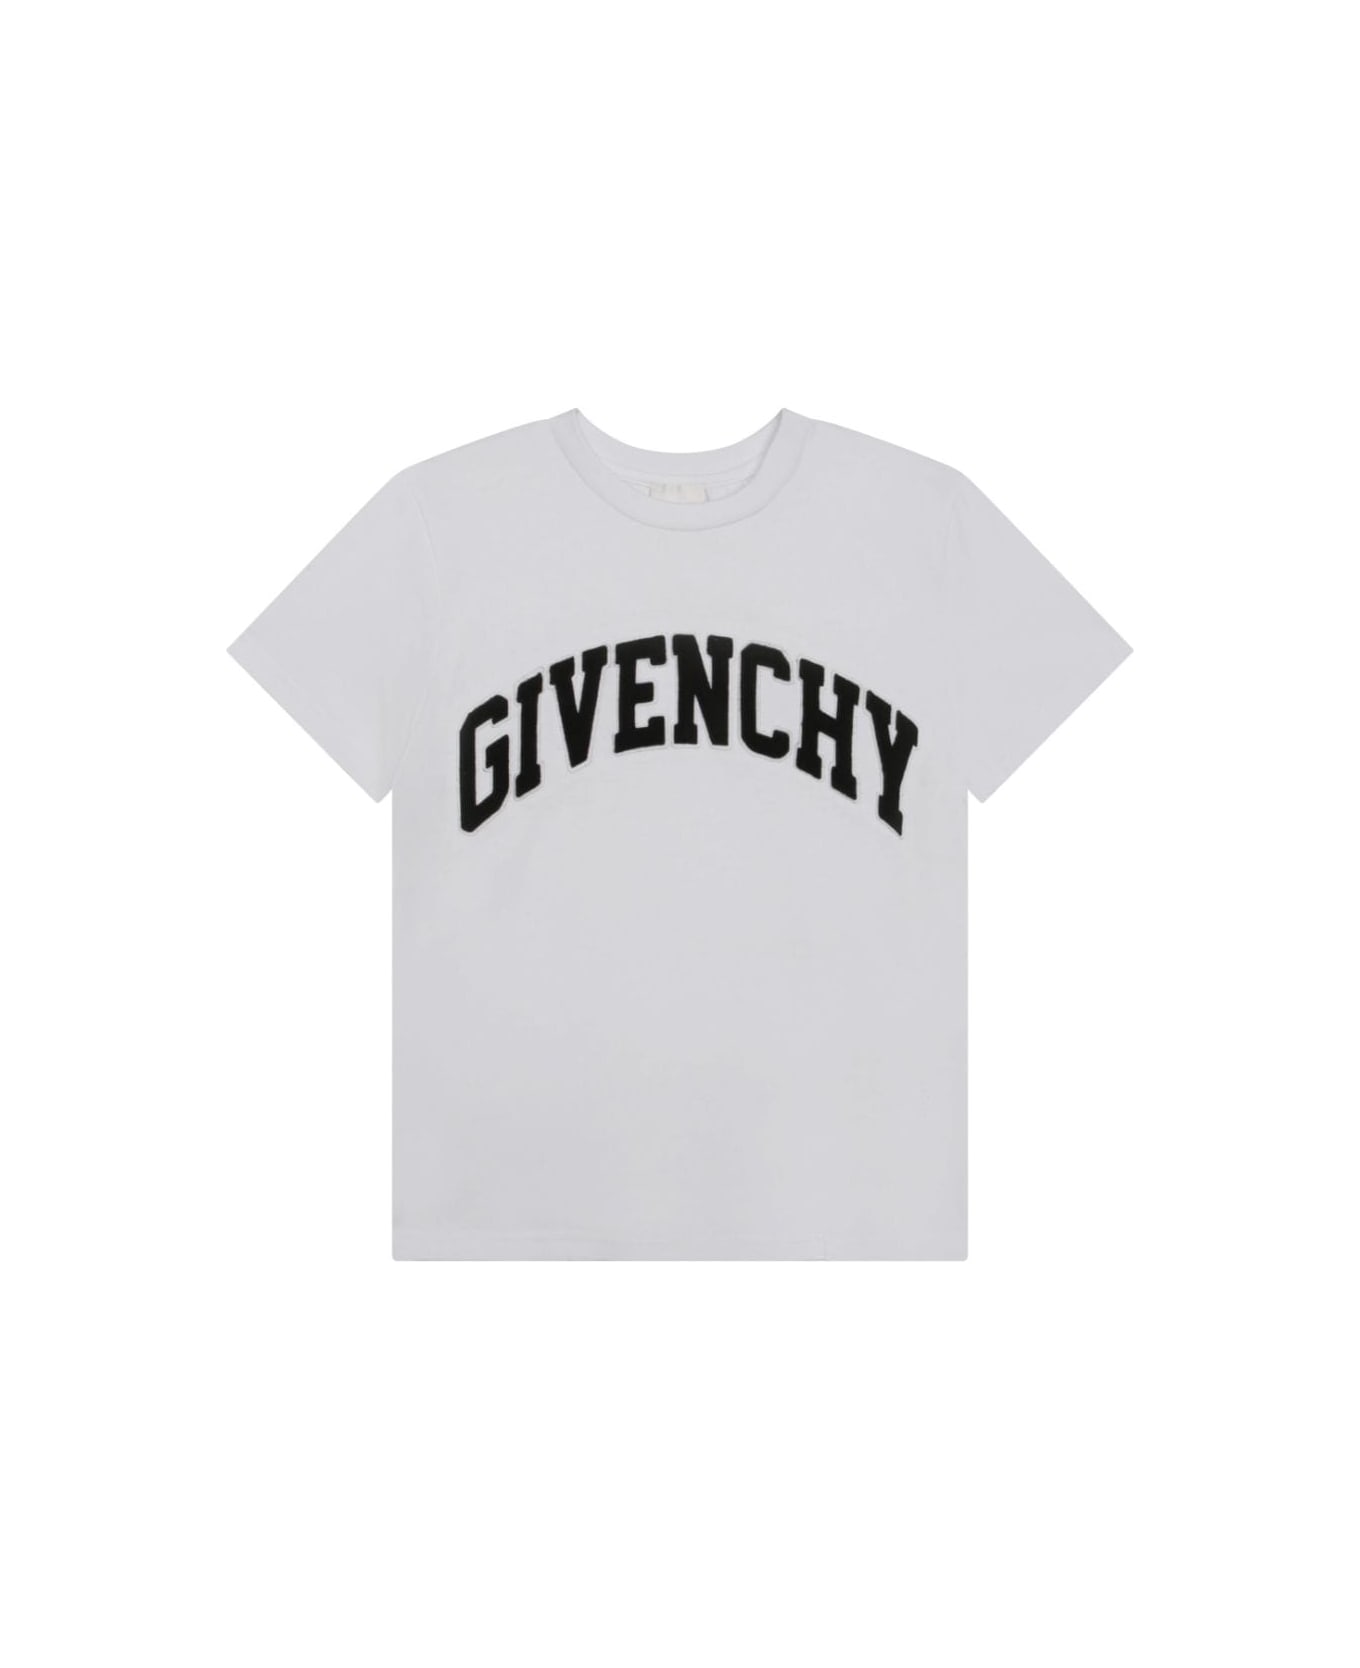 Givenchy T-shirt Nera In Jersey Di Cotone Bambino - Nero